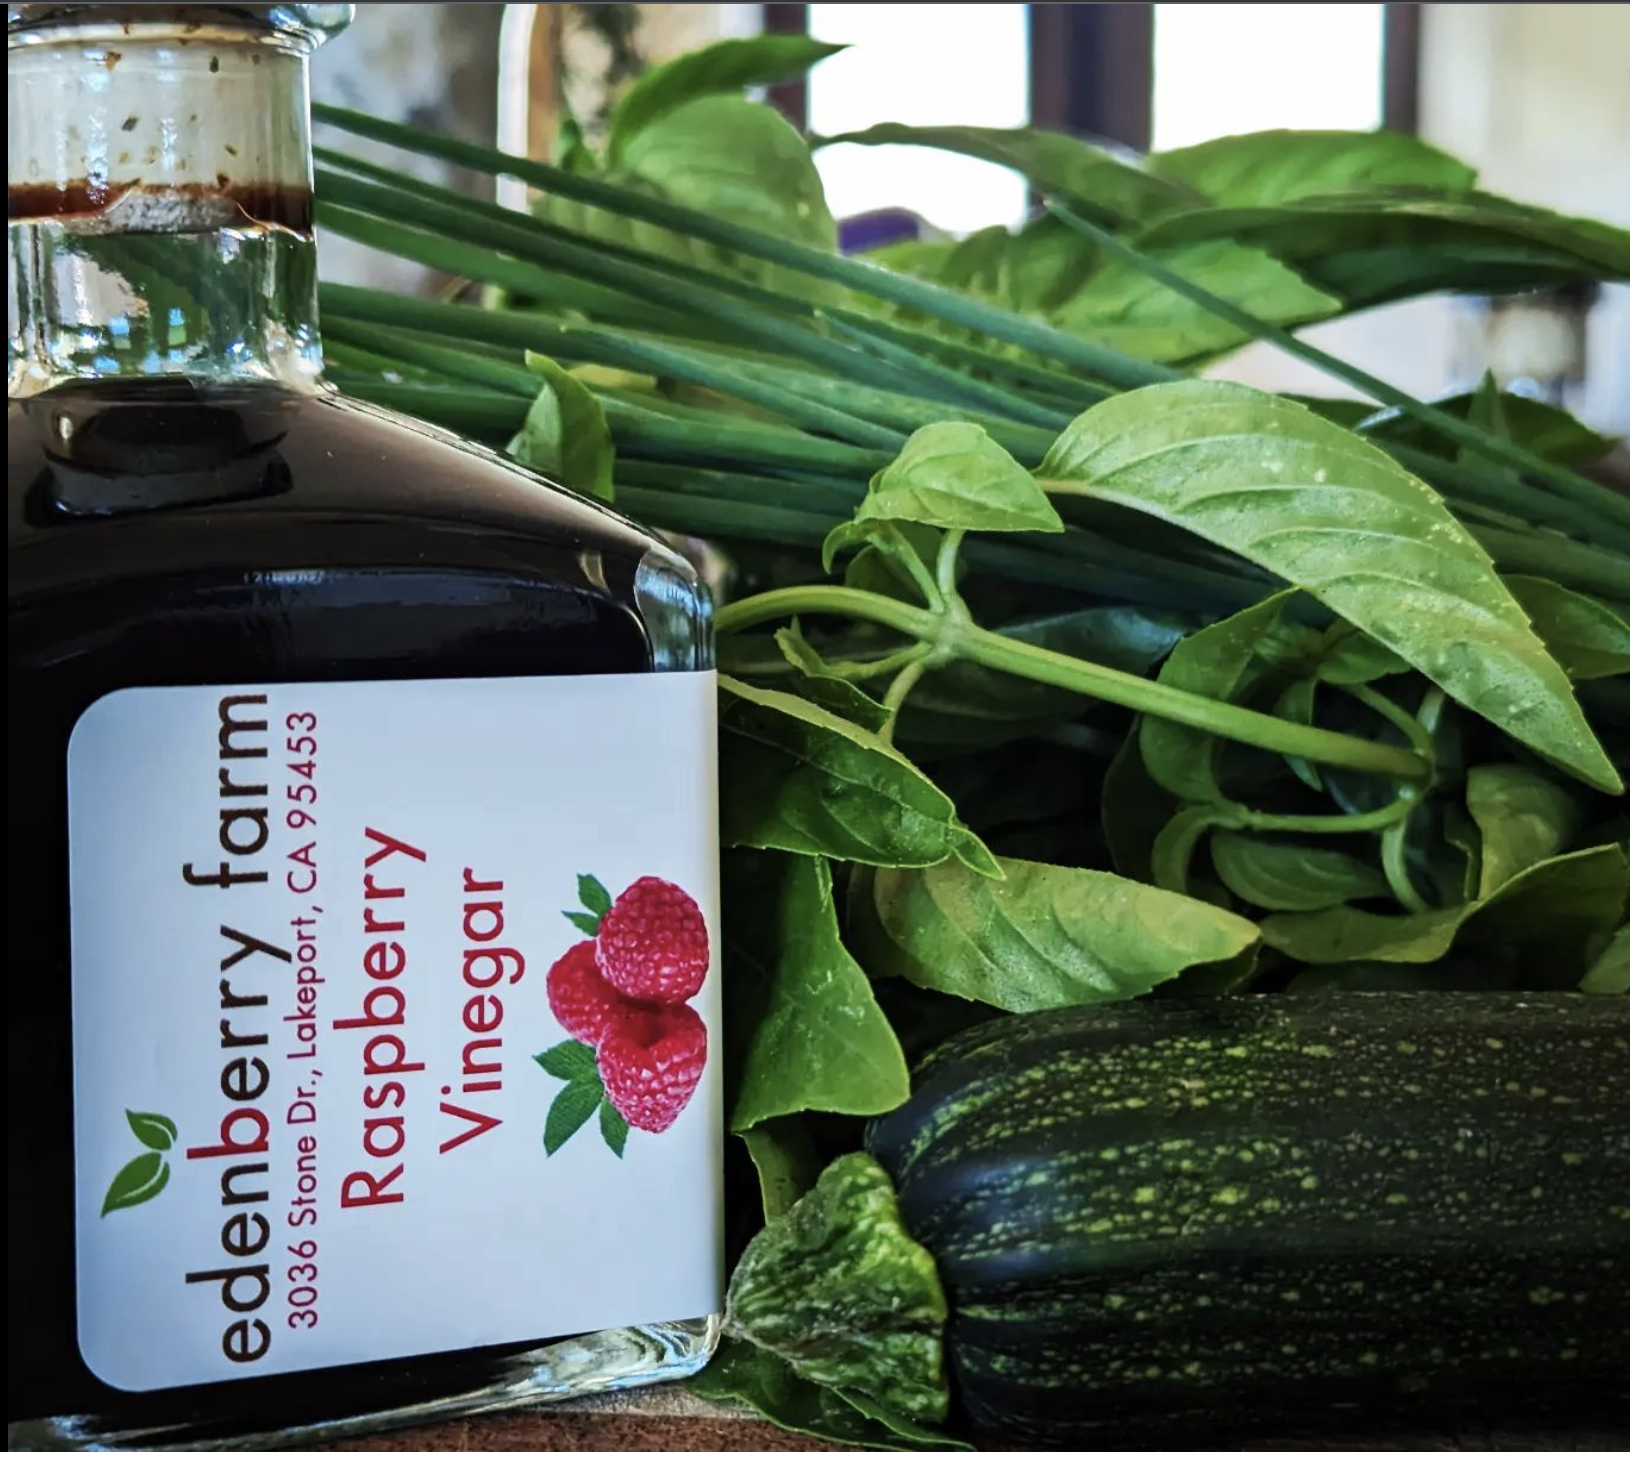 Picture of Edenberry Farm Raspberry Vinegar